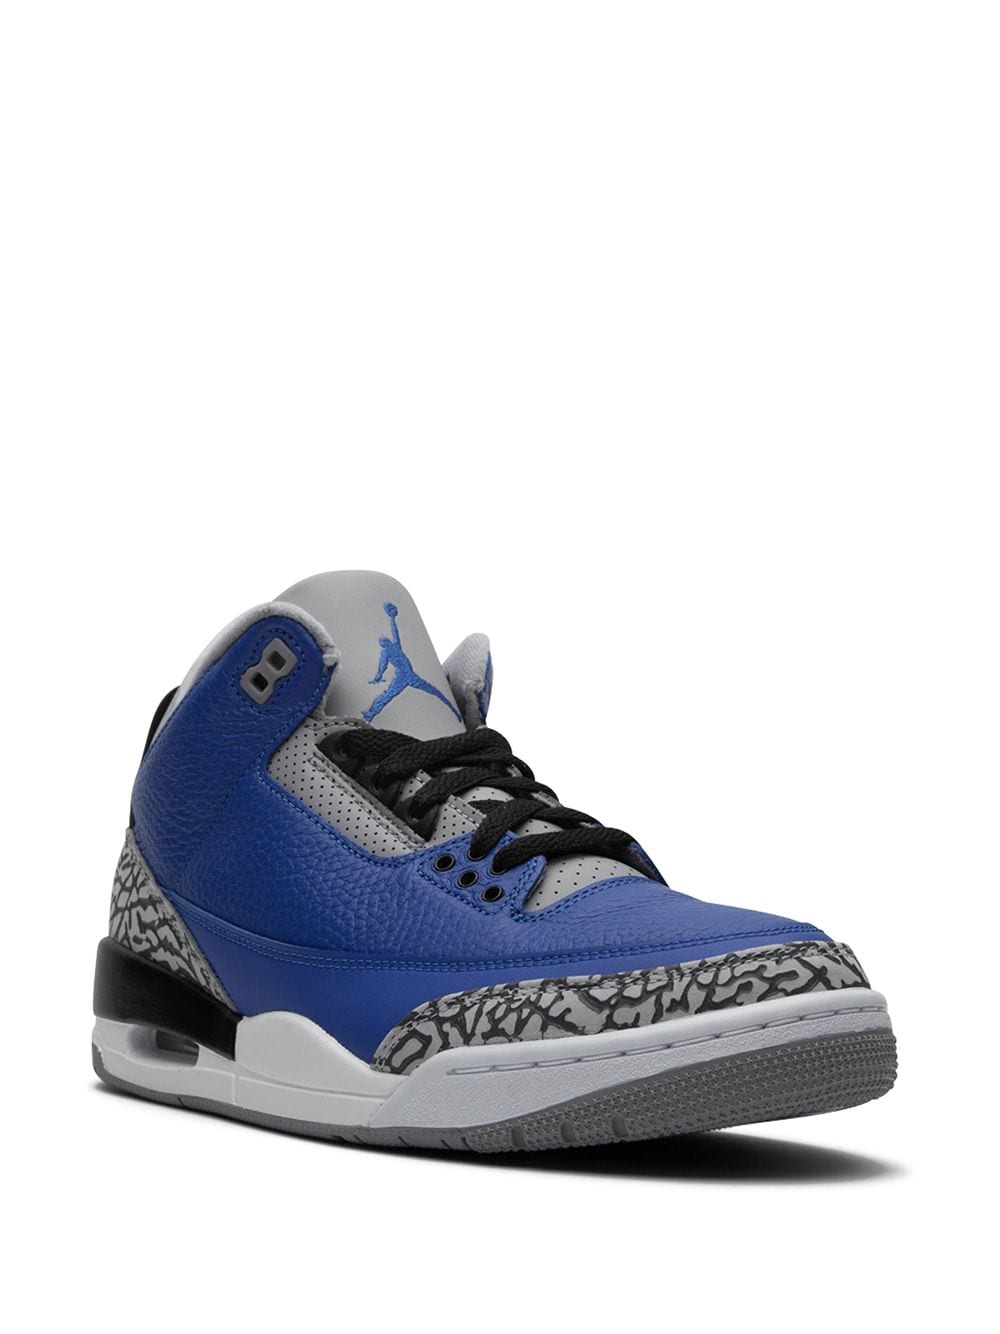 Jordan 3 Retro Sport Blue for Sale, Authenticity Guaranteed